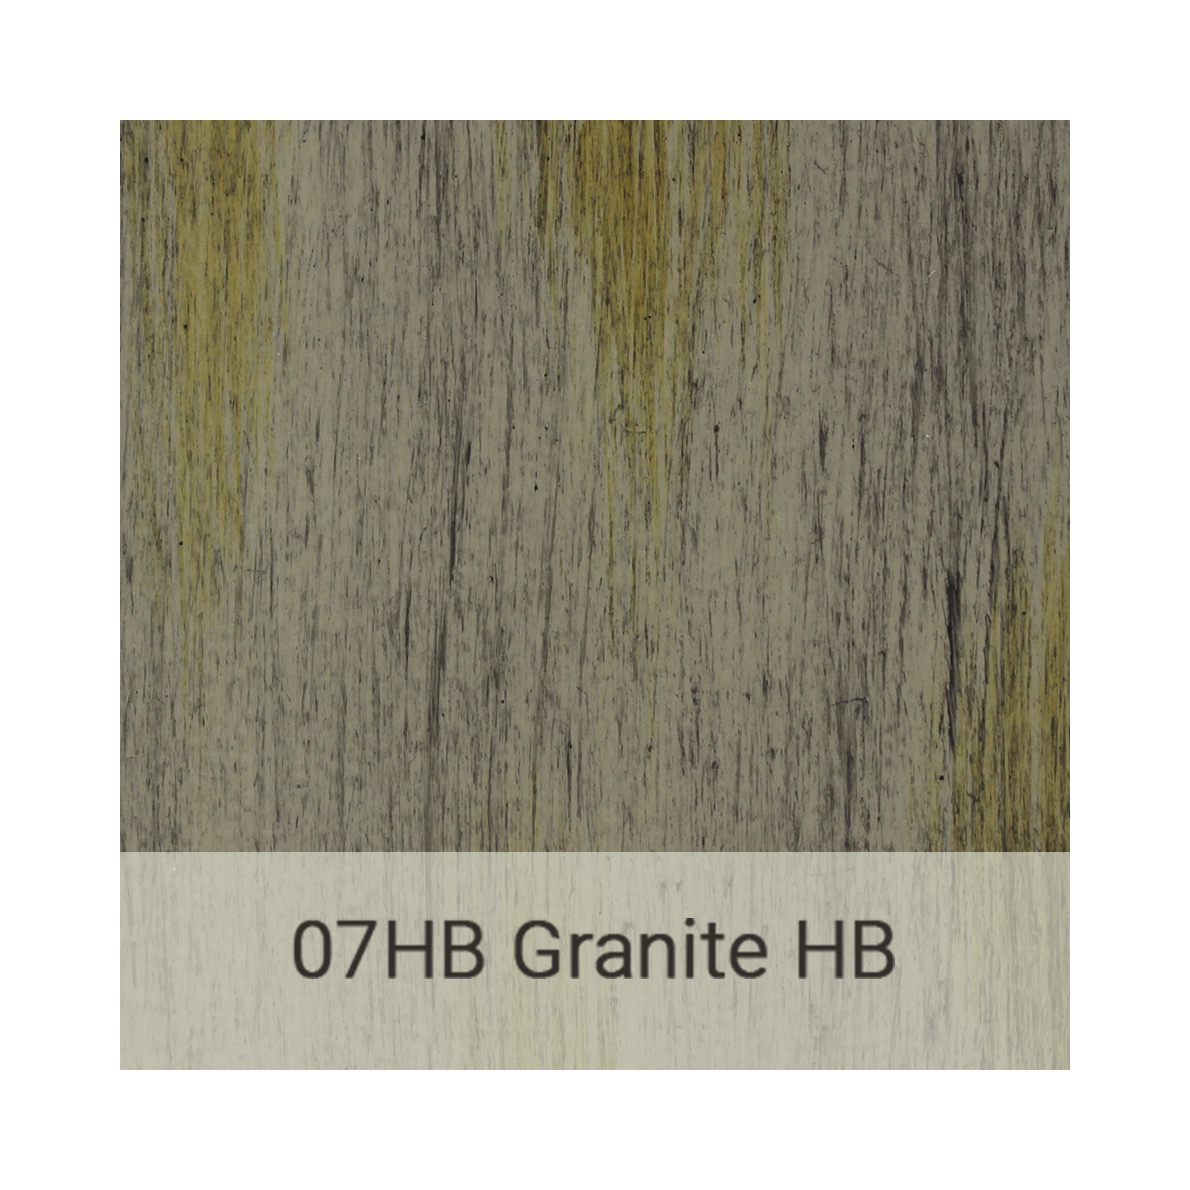 Kingston Casual handbrushed-07hb-granite-hb